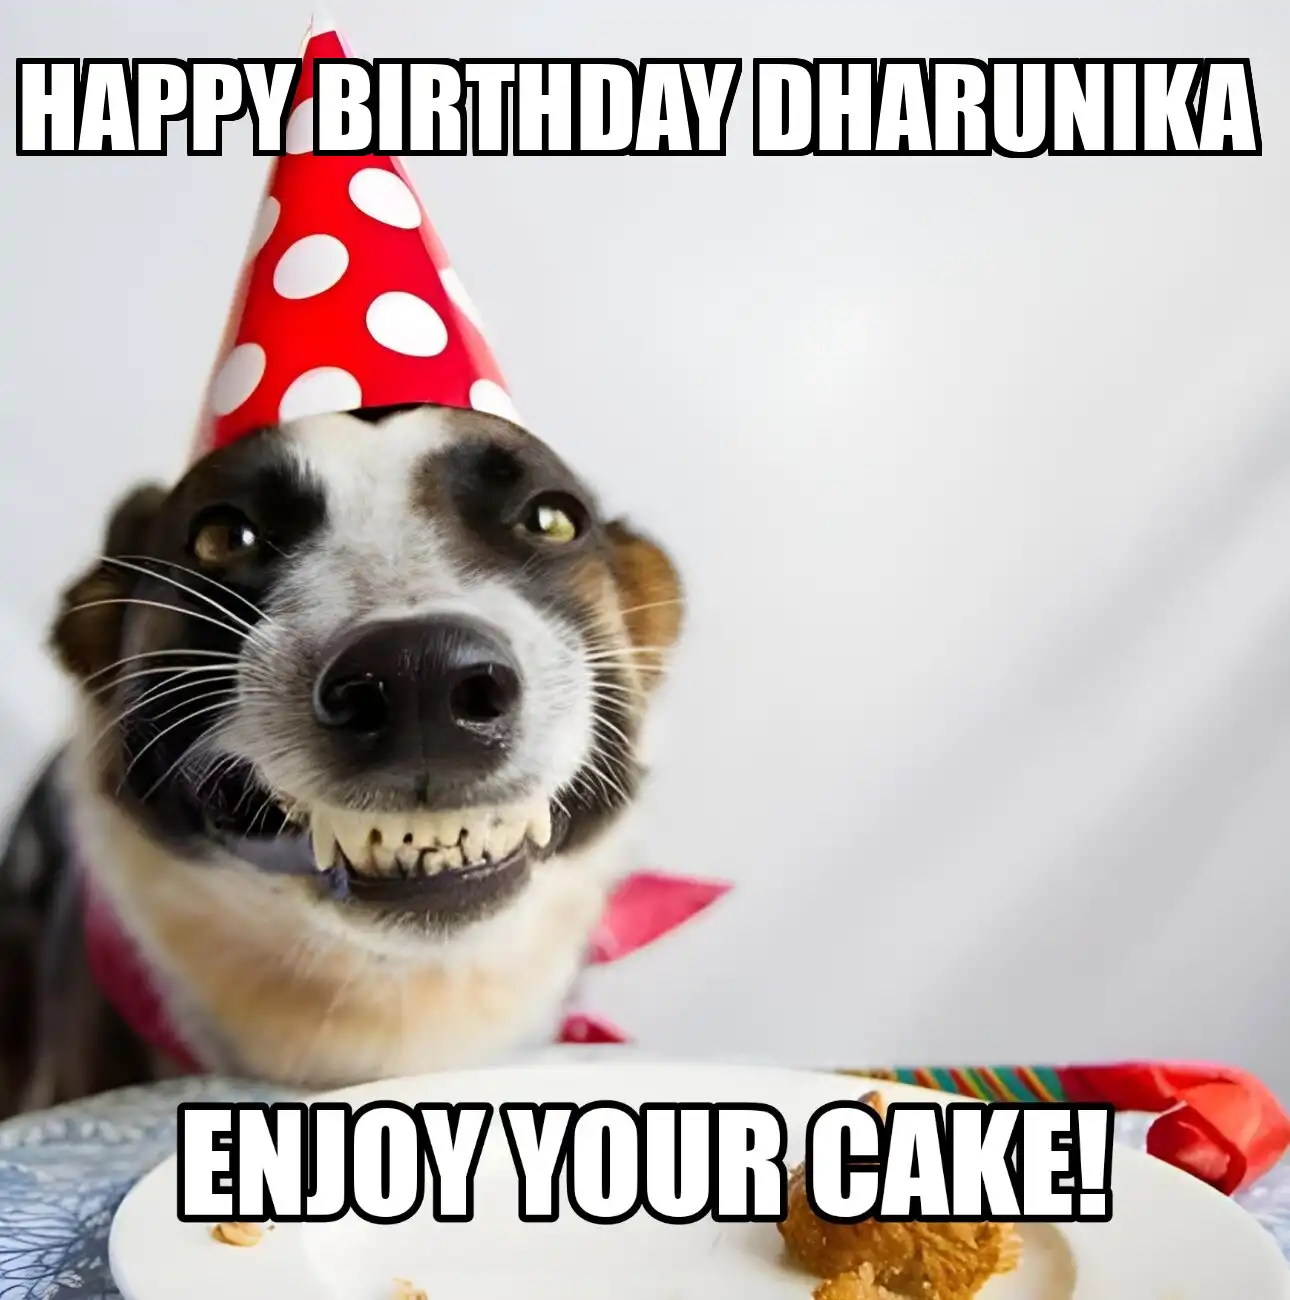 Happy Birthday Dharunika Enjoy Your Cake Dog Meme